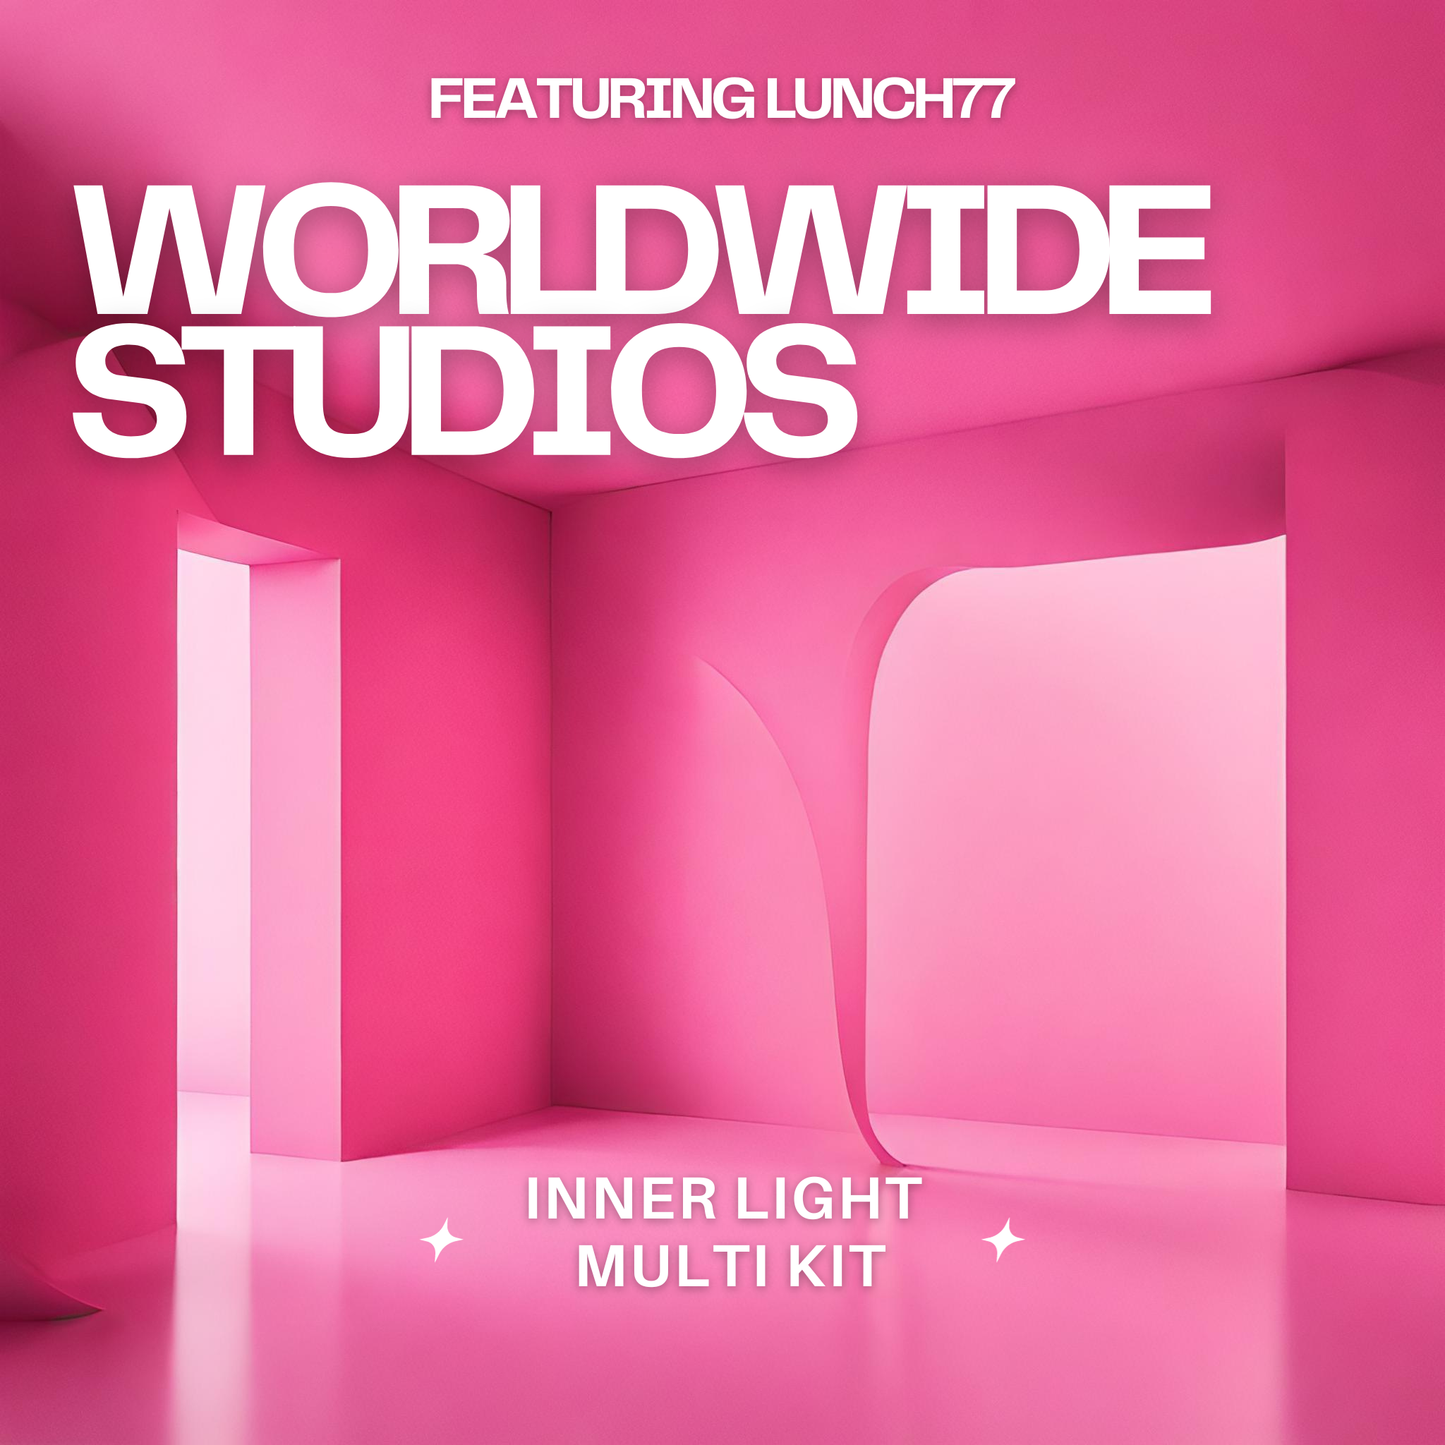 Worldwide Studios Inner Light Multi-Kit: Featuring Lunch77